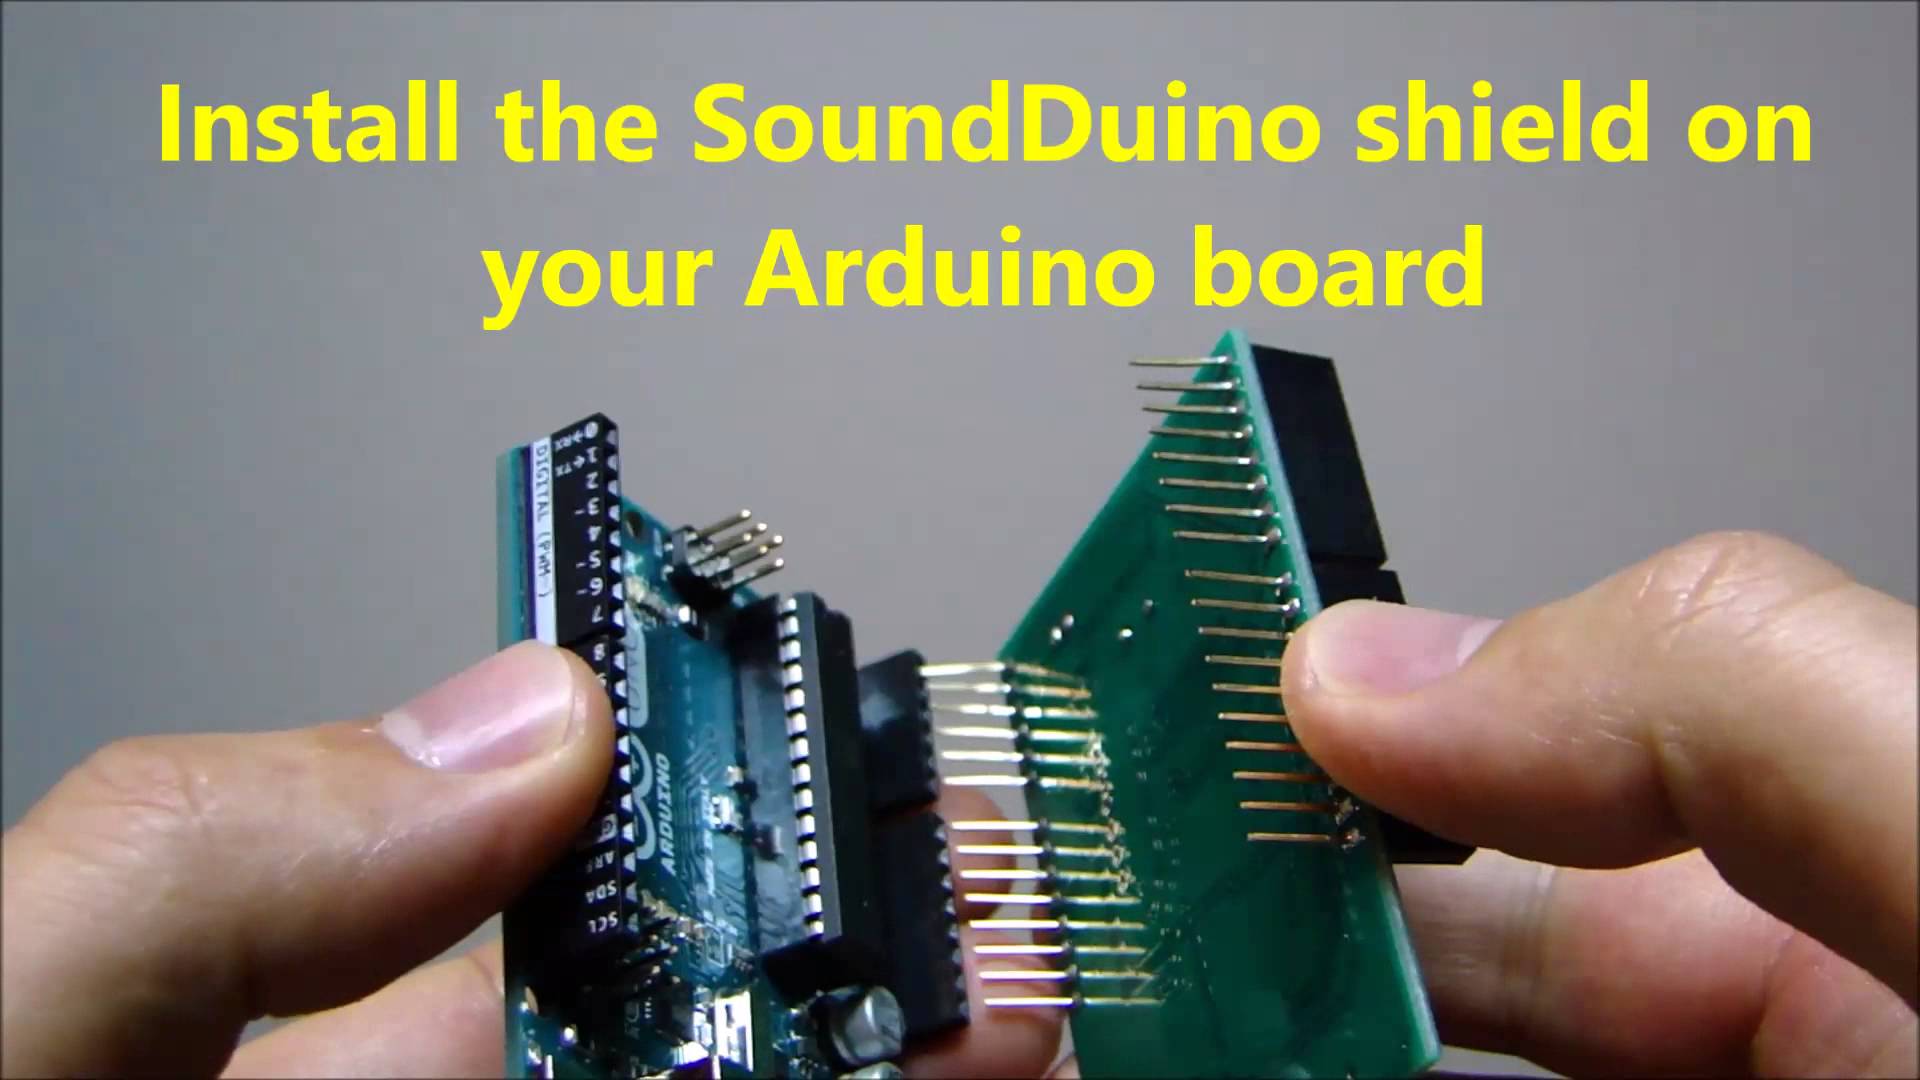 SoundDuino 3, The Latest Sound Shield for Arduino